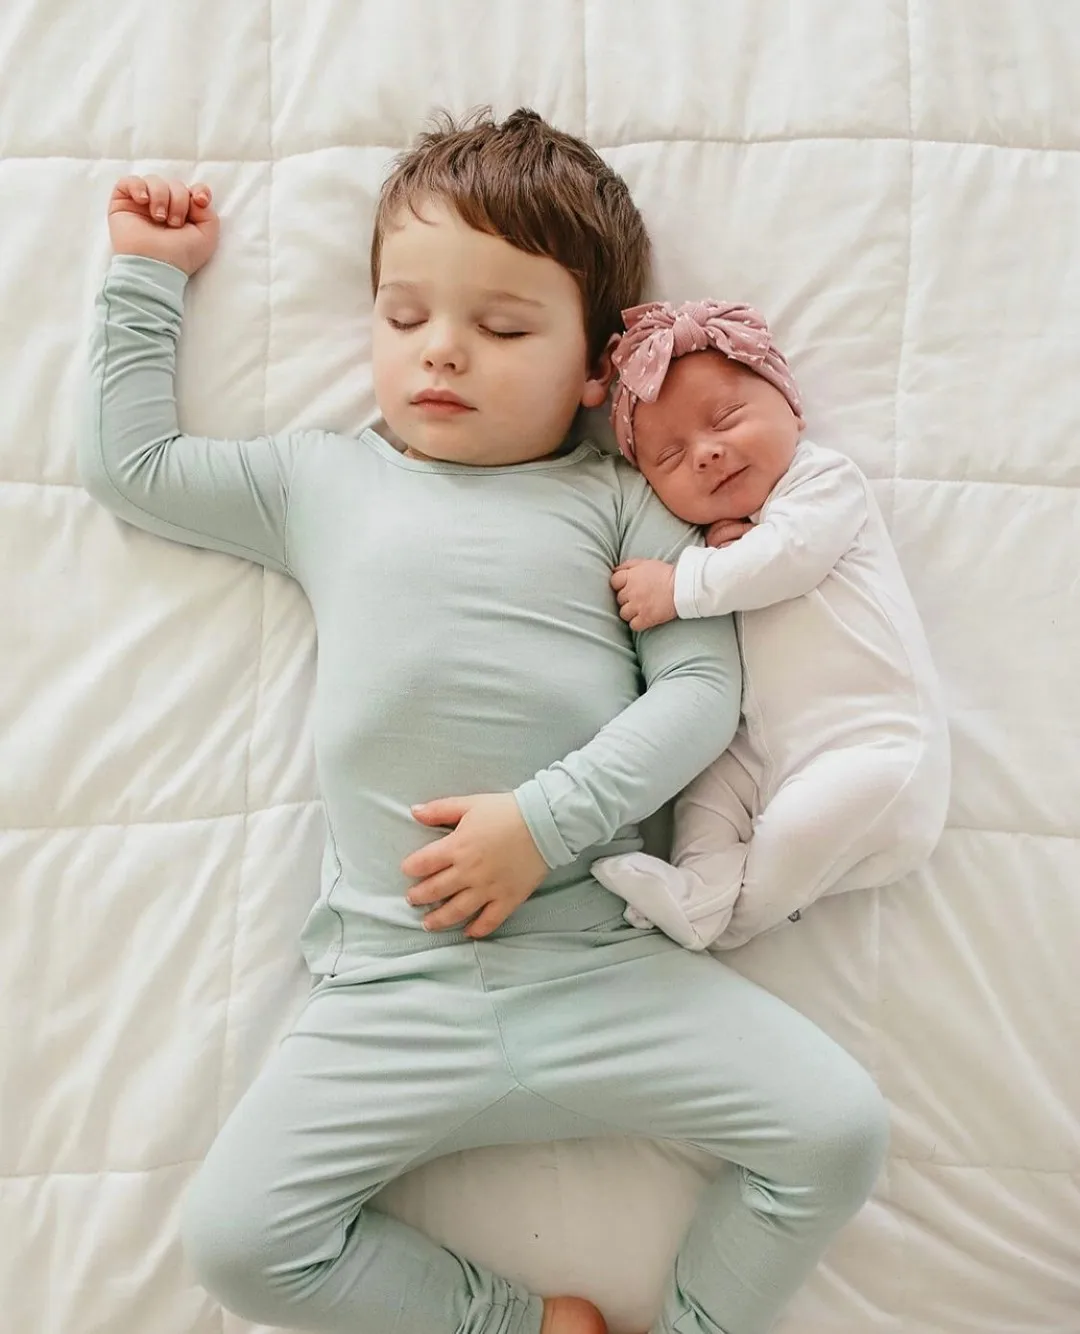 Stocked Girls Long Sleeves T-shirt and Leggings Set Plain Candy Color Kids Pajamas Sets For Infants toddler sleepwear pjs